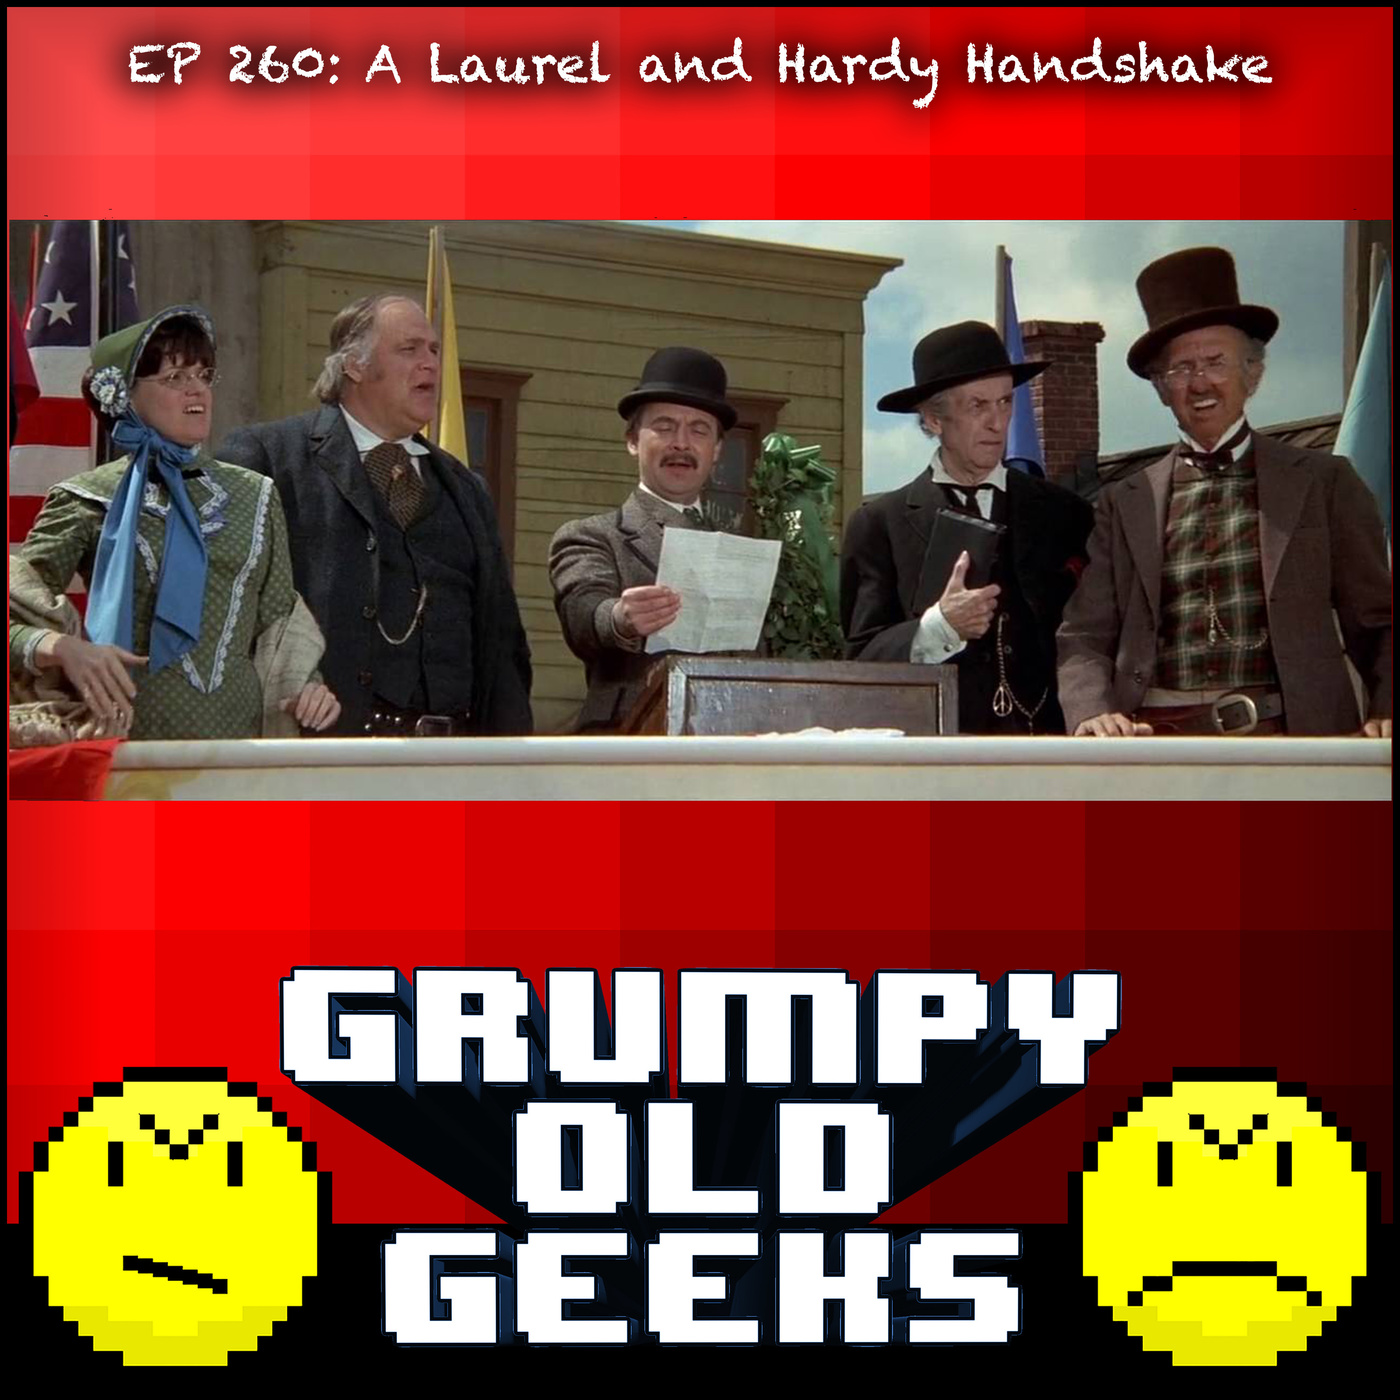 260: A Laurel and Hardy Handshake